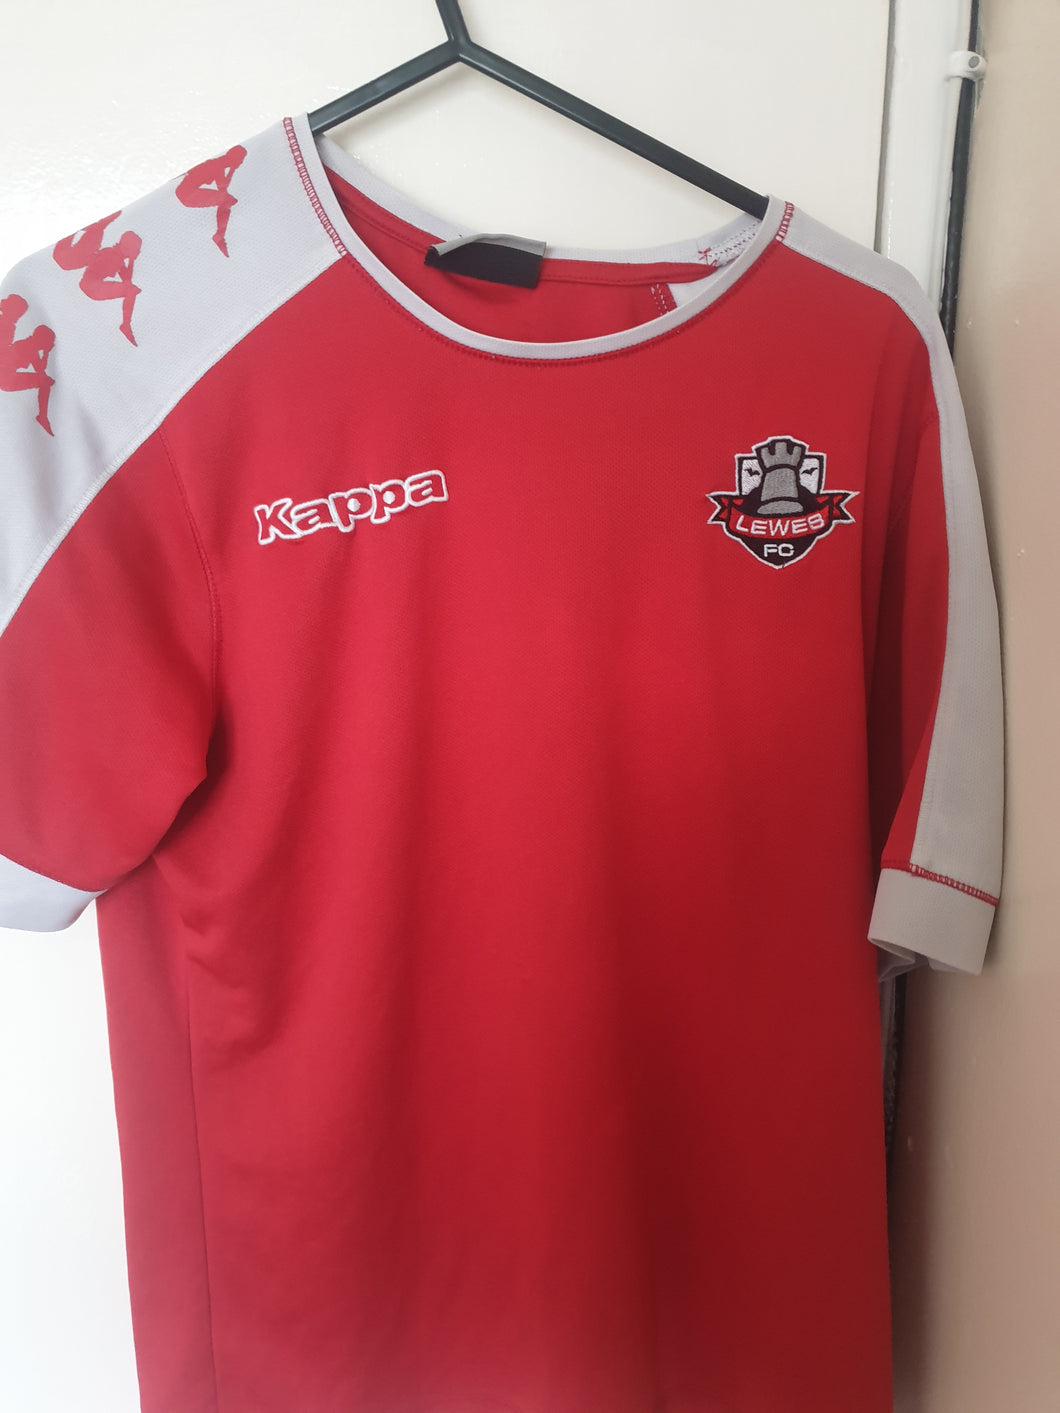 Lewes Fc Training Football Shirt Kappa(Size Medium/Small)